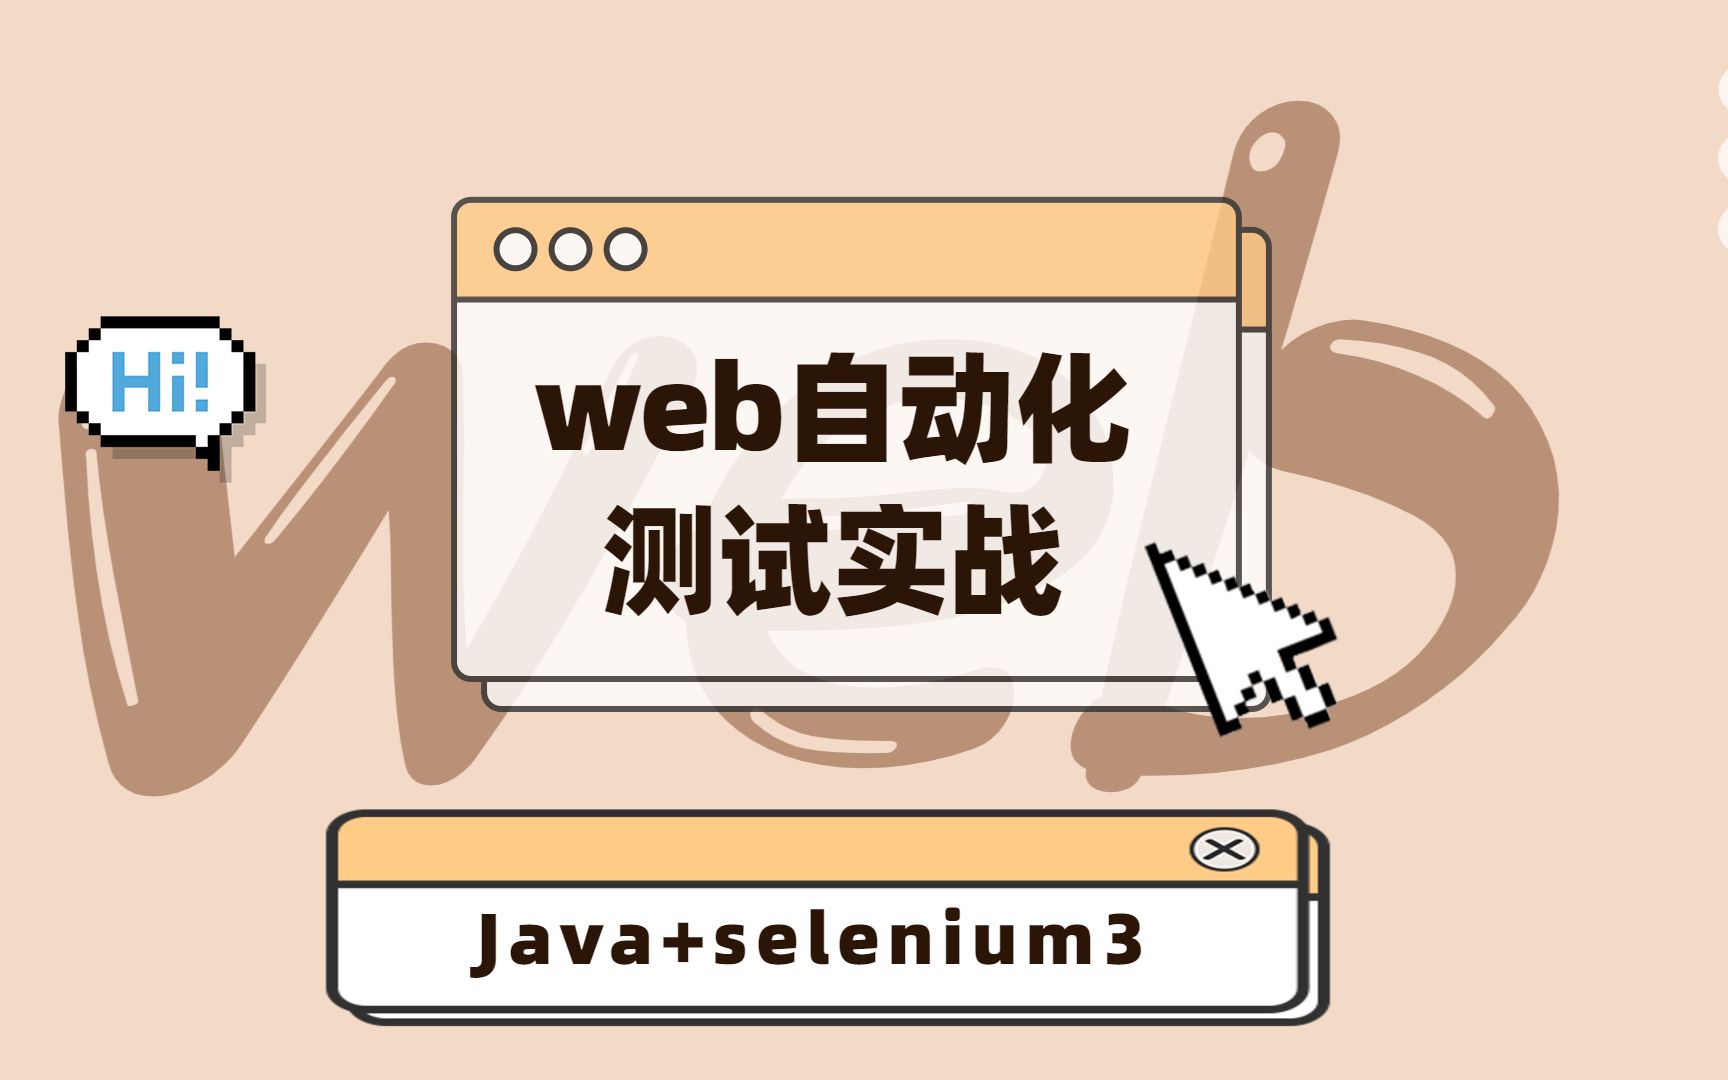 Java+selenium3 web自动化测试实战